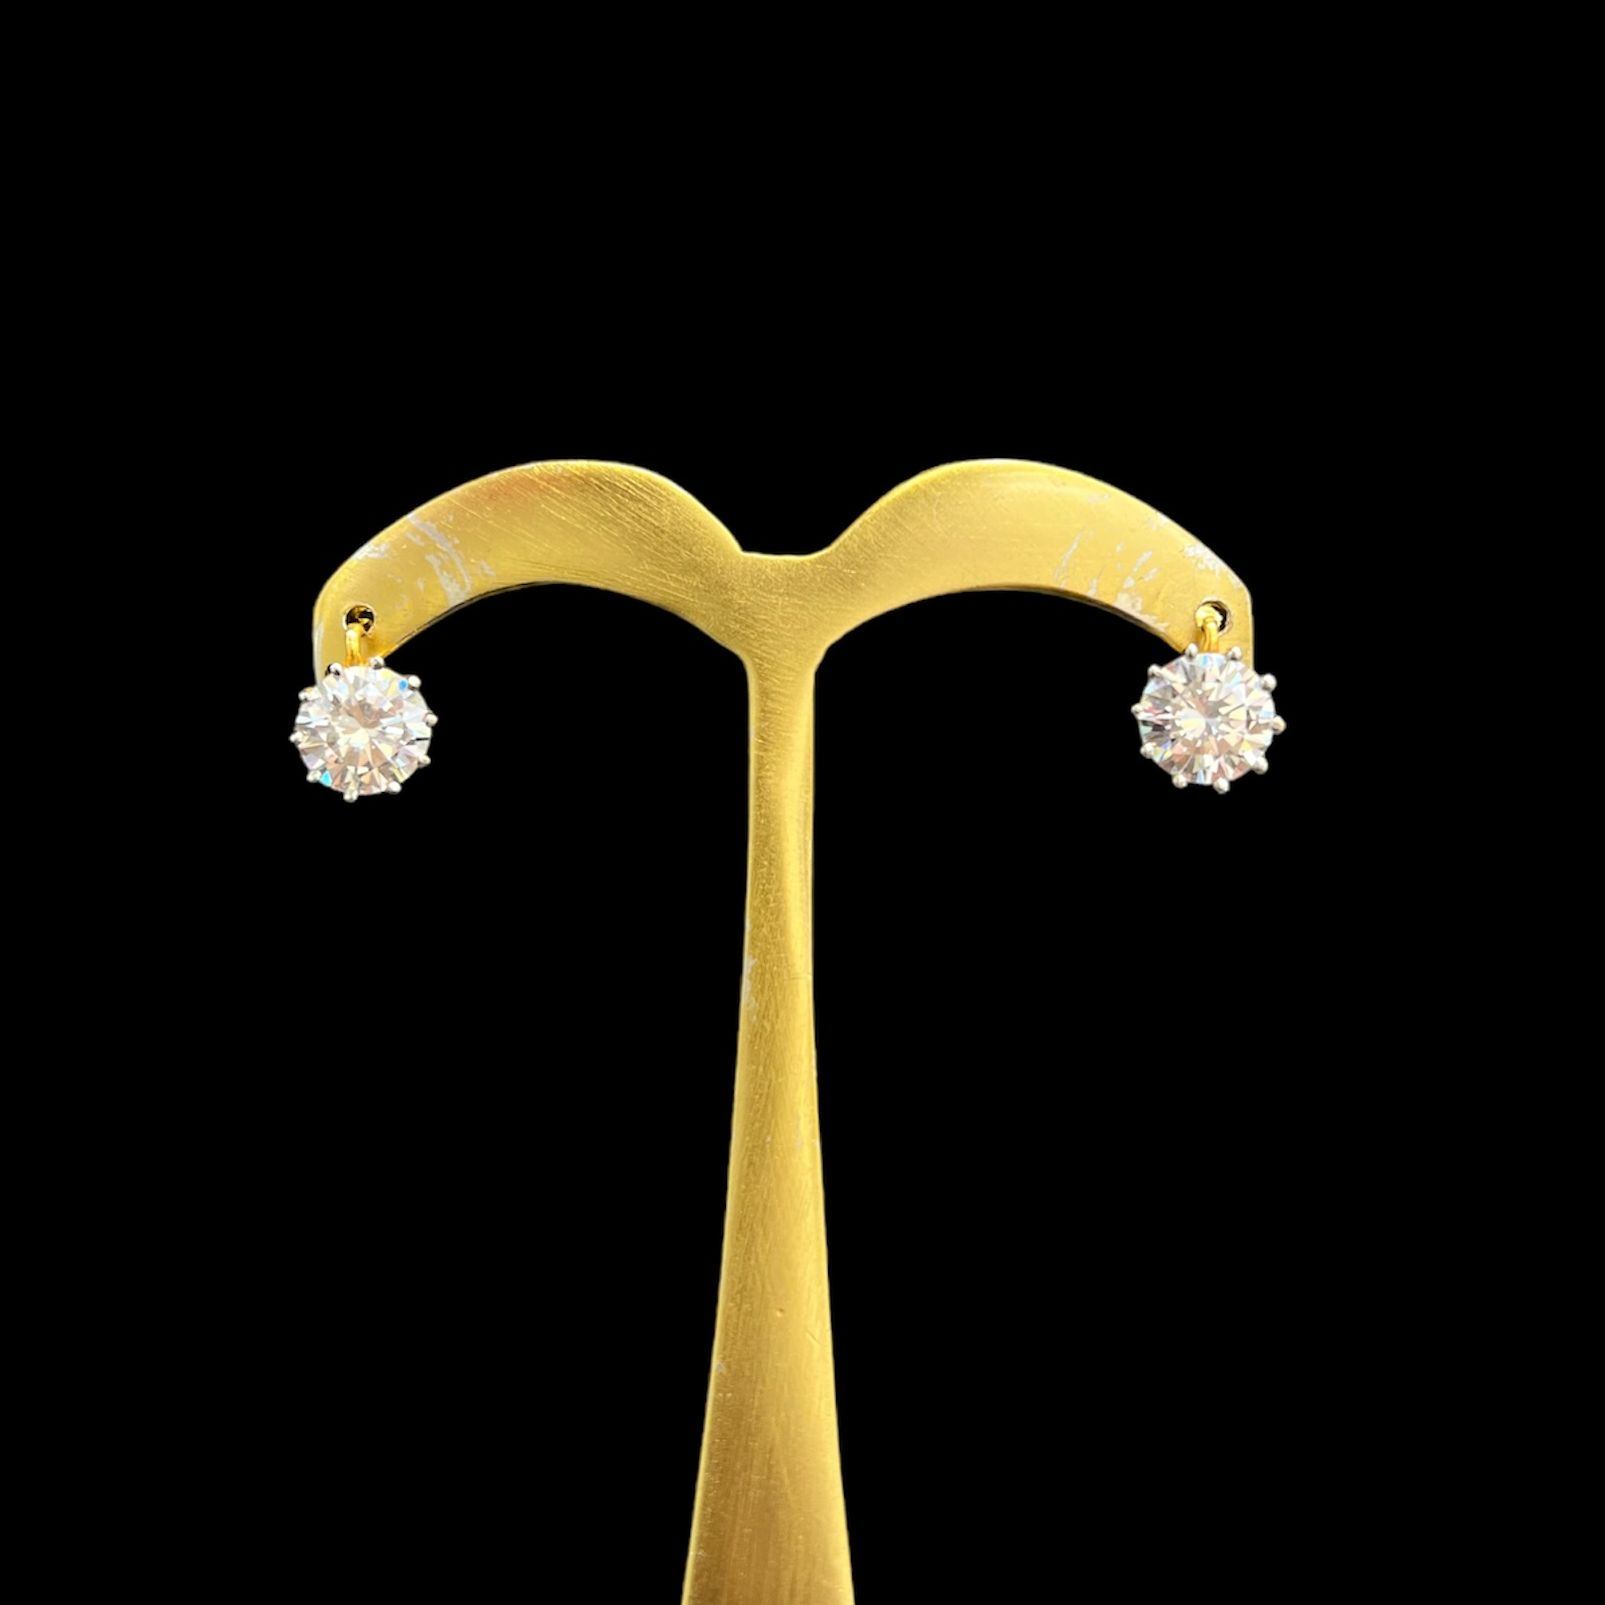 9ct Gold 1.00ct Black Diamond Single Stone Solitaire Stud Earrings -  Simulated | eBay